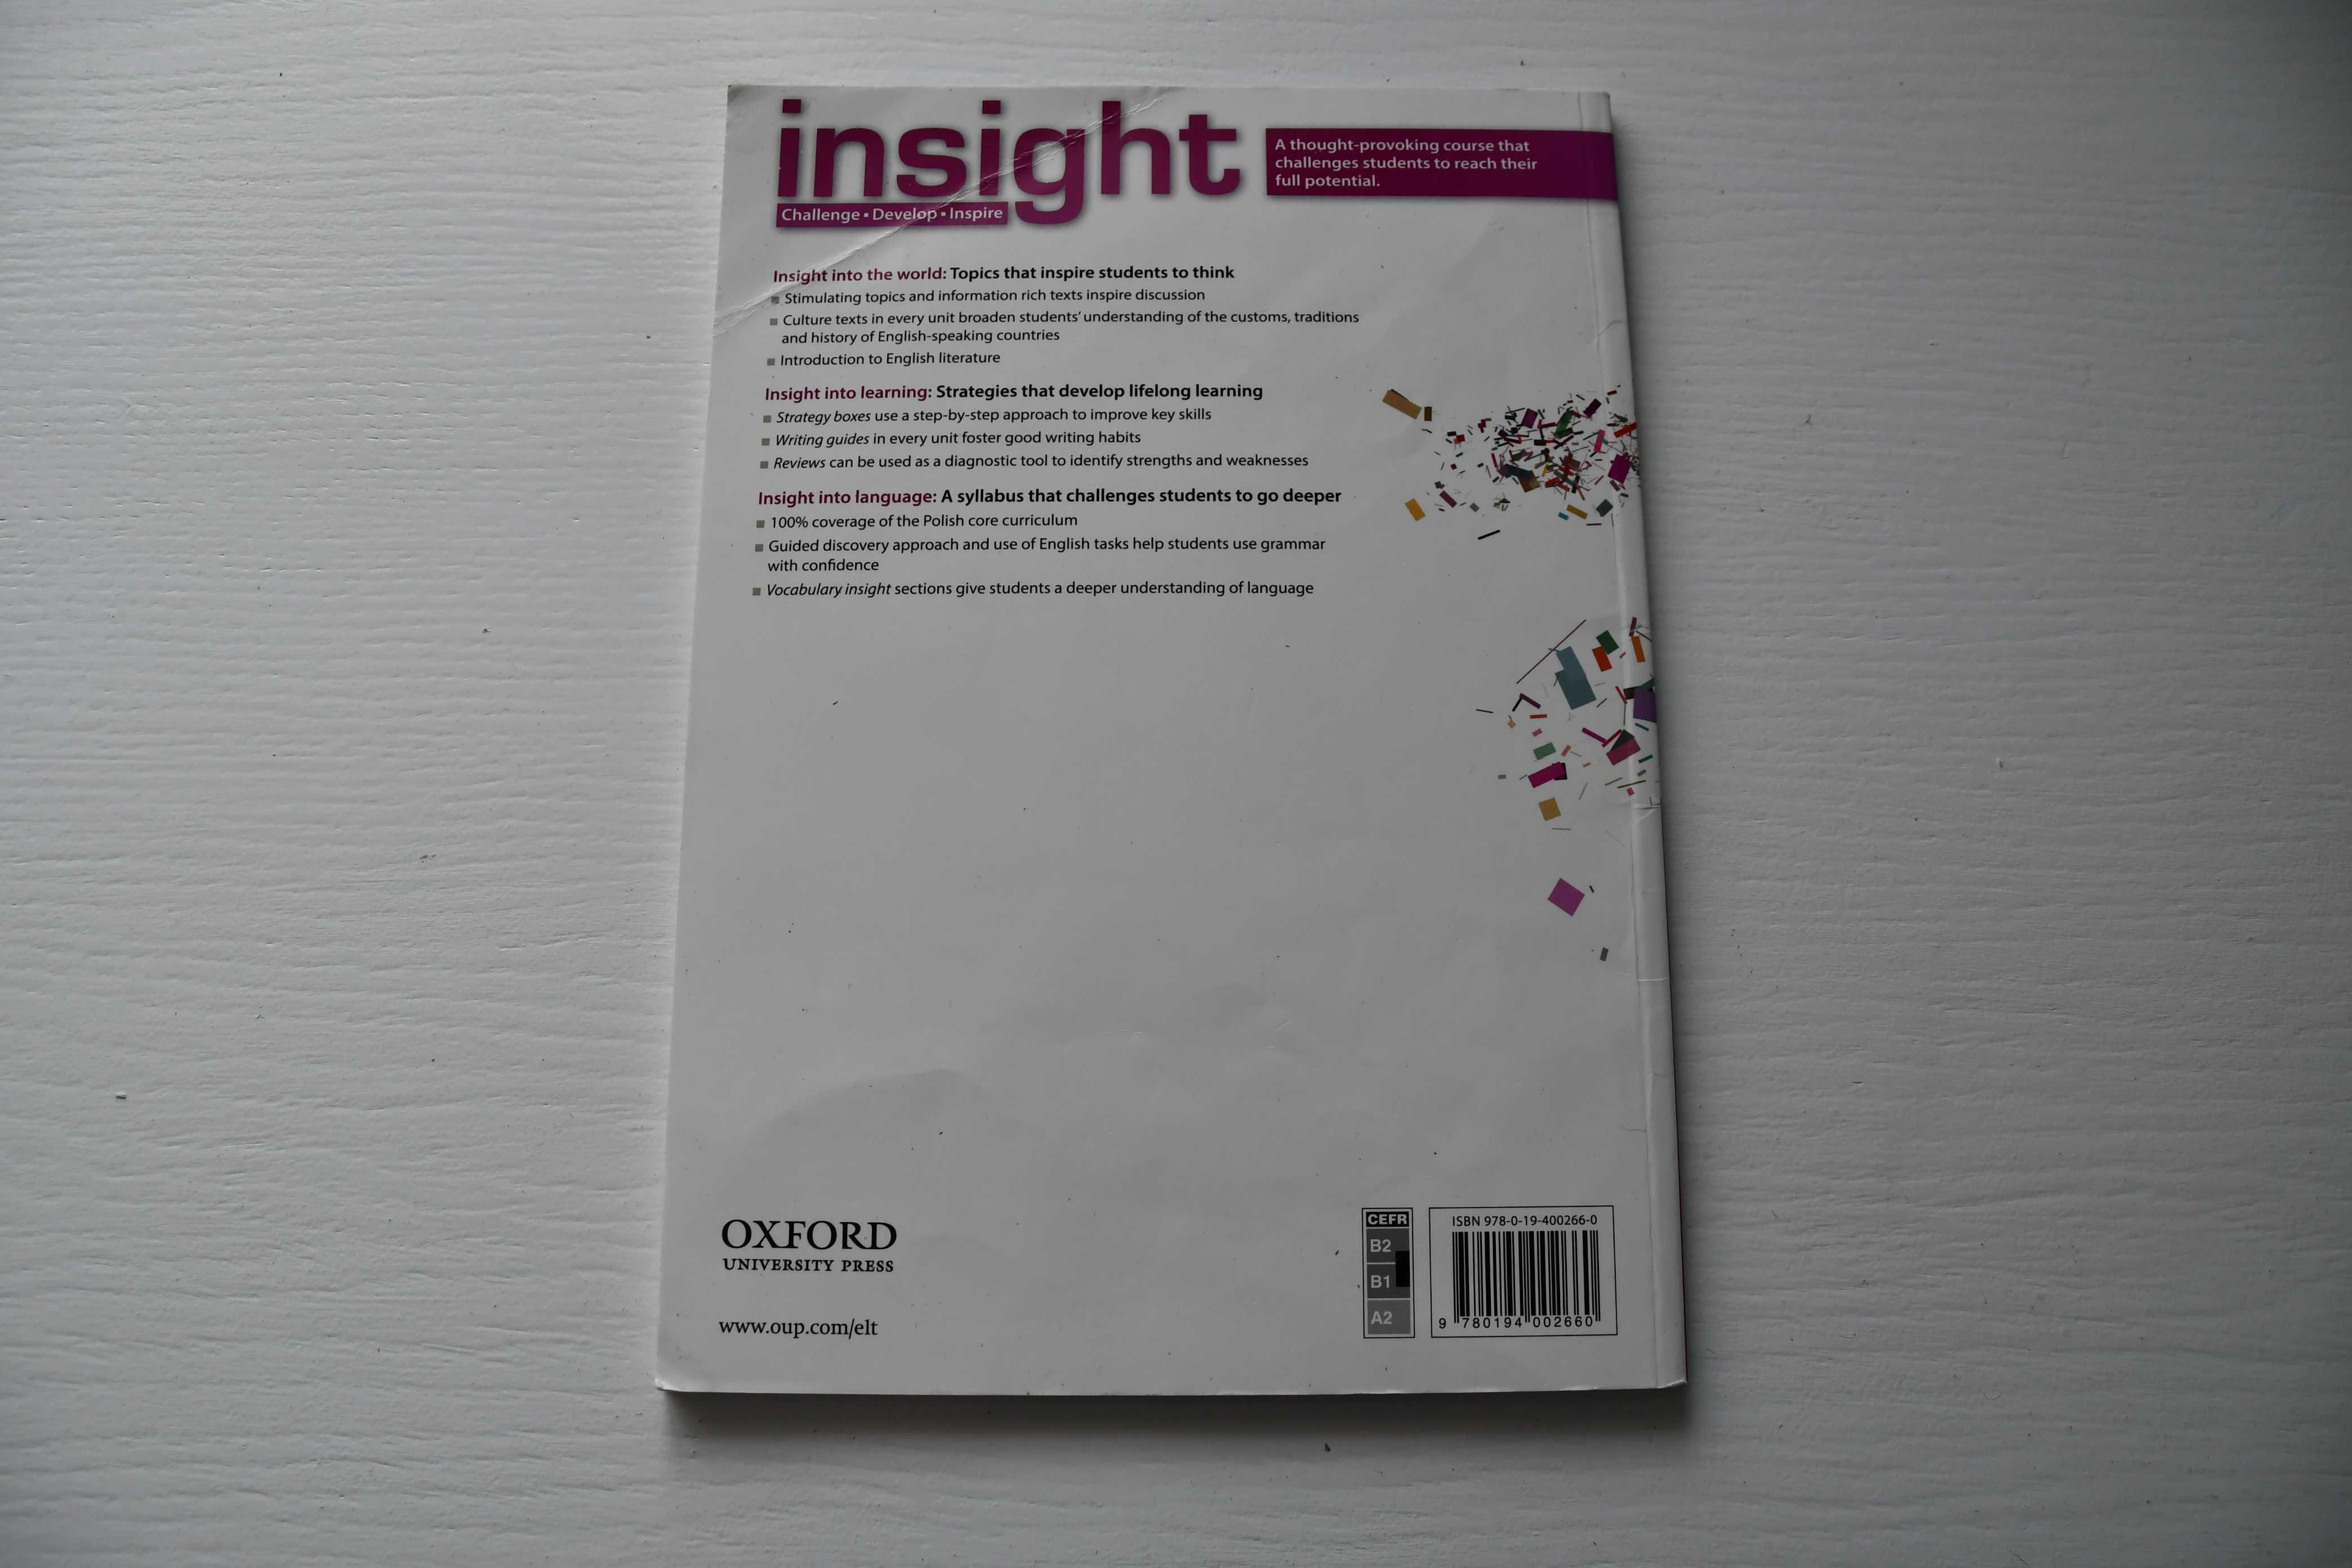 Insight Intermediate Student’s Book